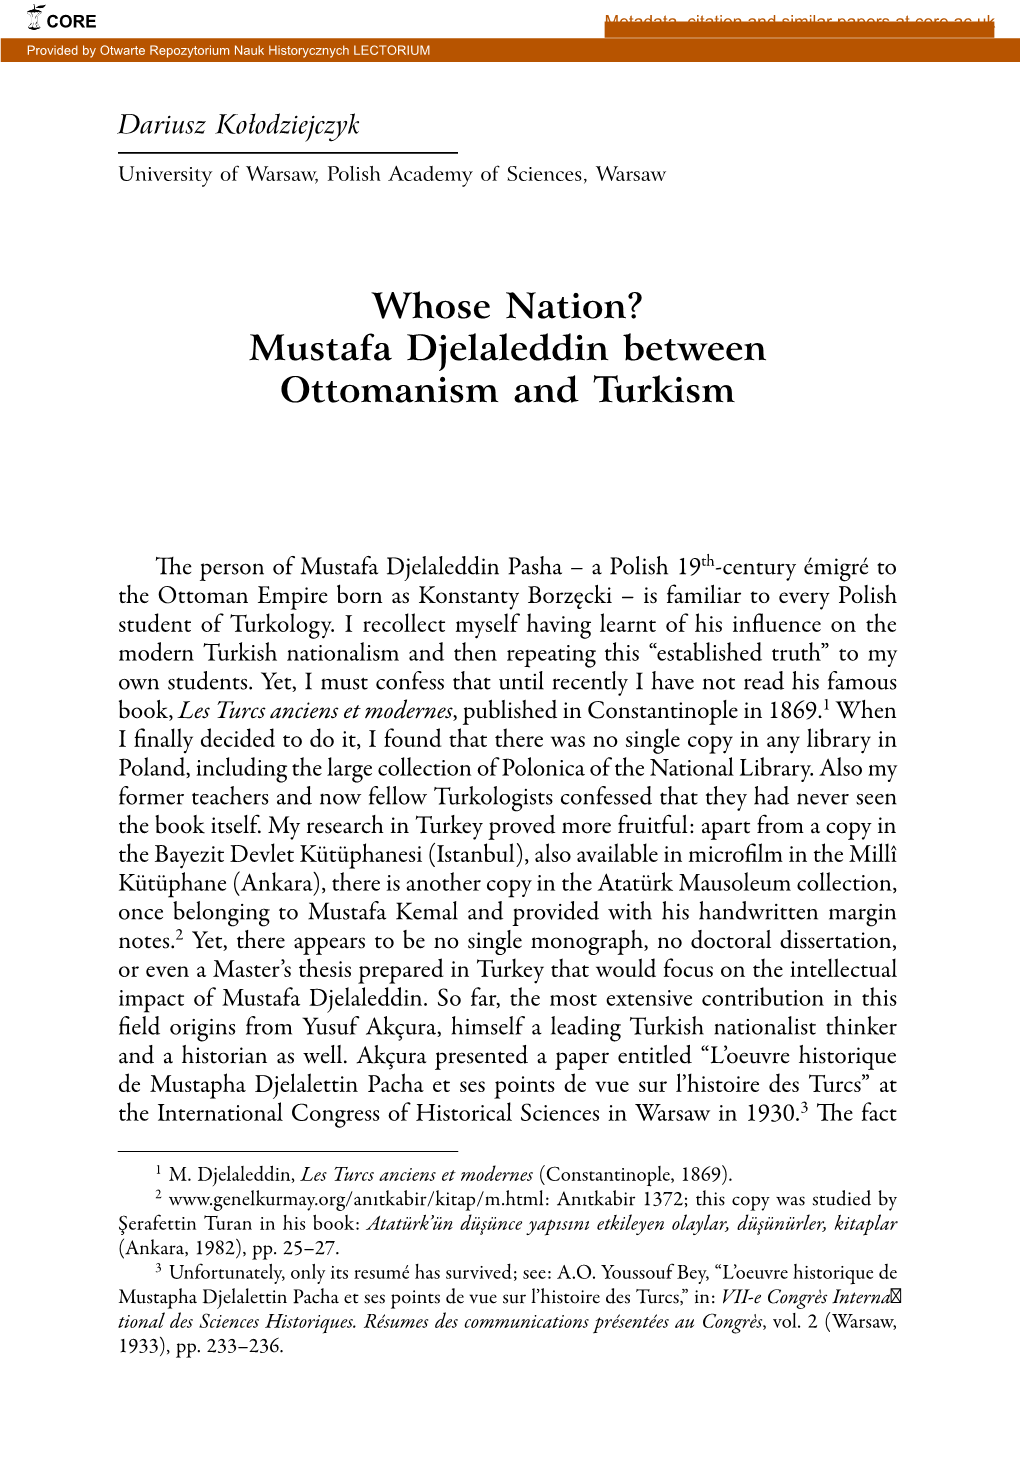 Whose Nation? Mustafa Djelaleddin Between Ottomanism and Turkism